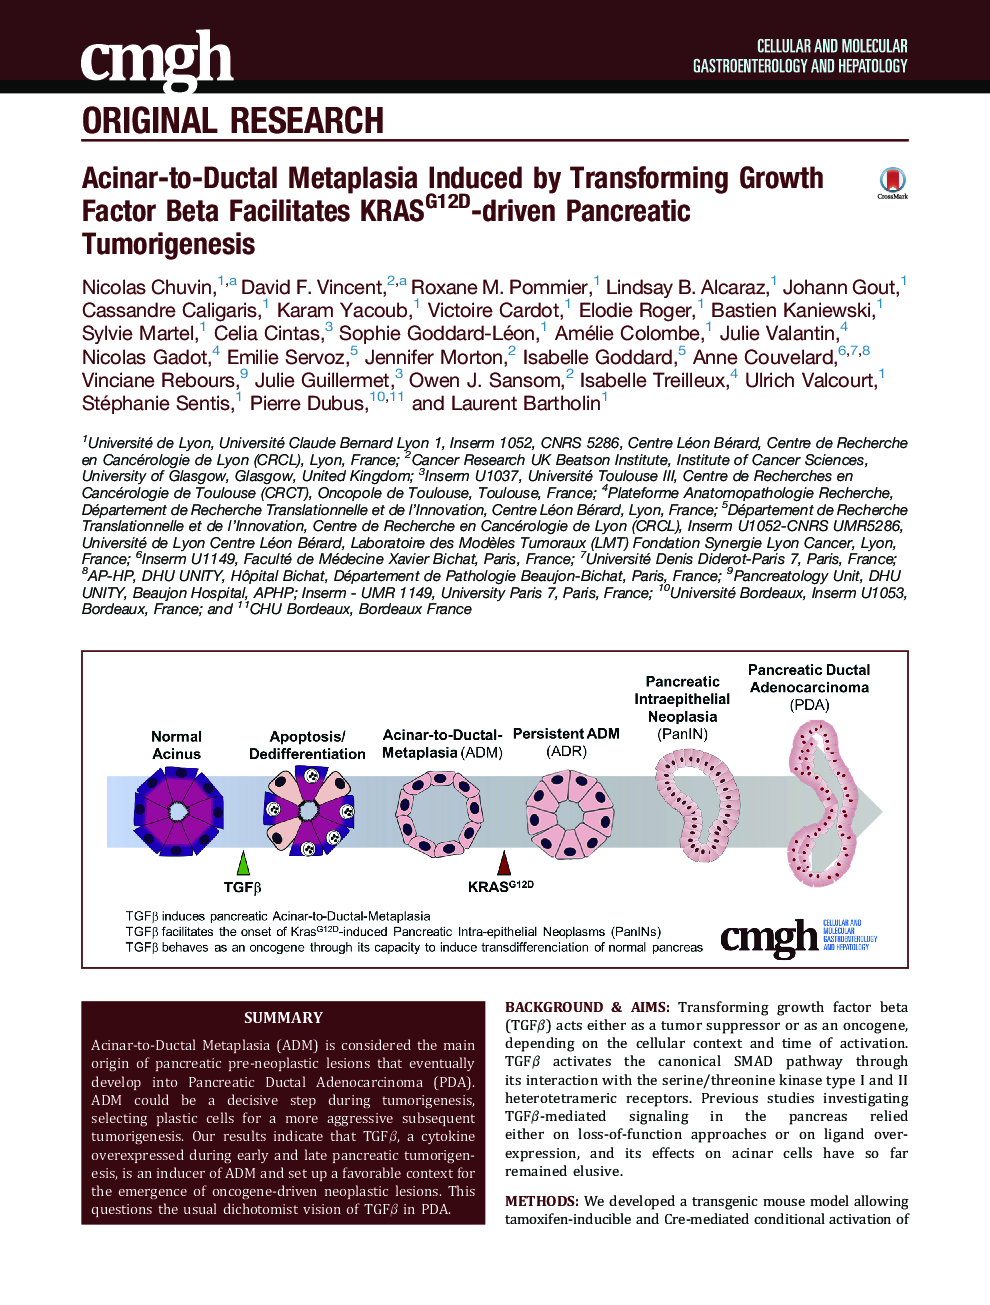 Acinar-to-Ductal Metaplasia Induced by Transforming Growth Factor Beta Facilitates KRASG12D-driven Pancreatic Tumorigenesis